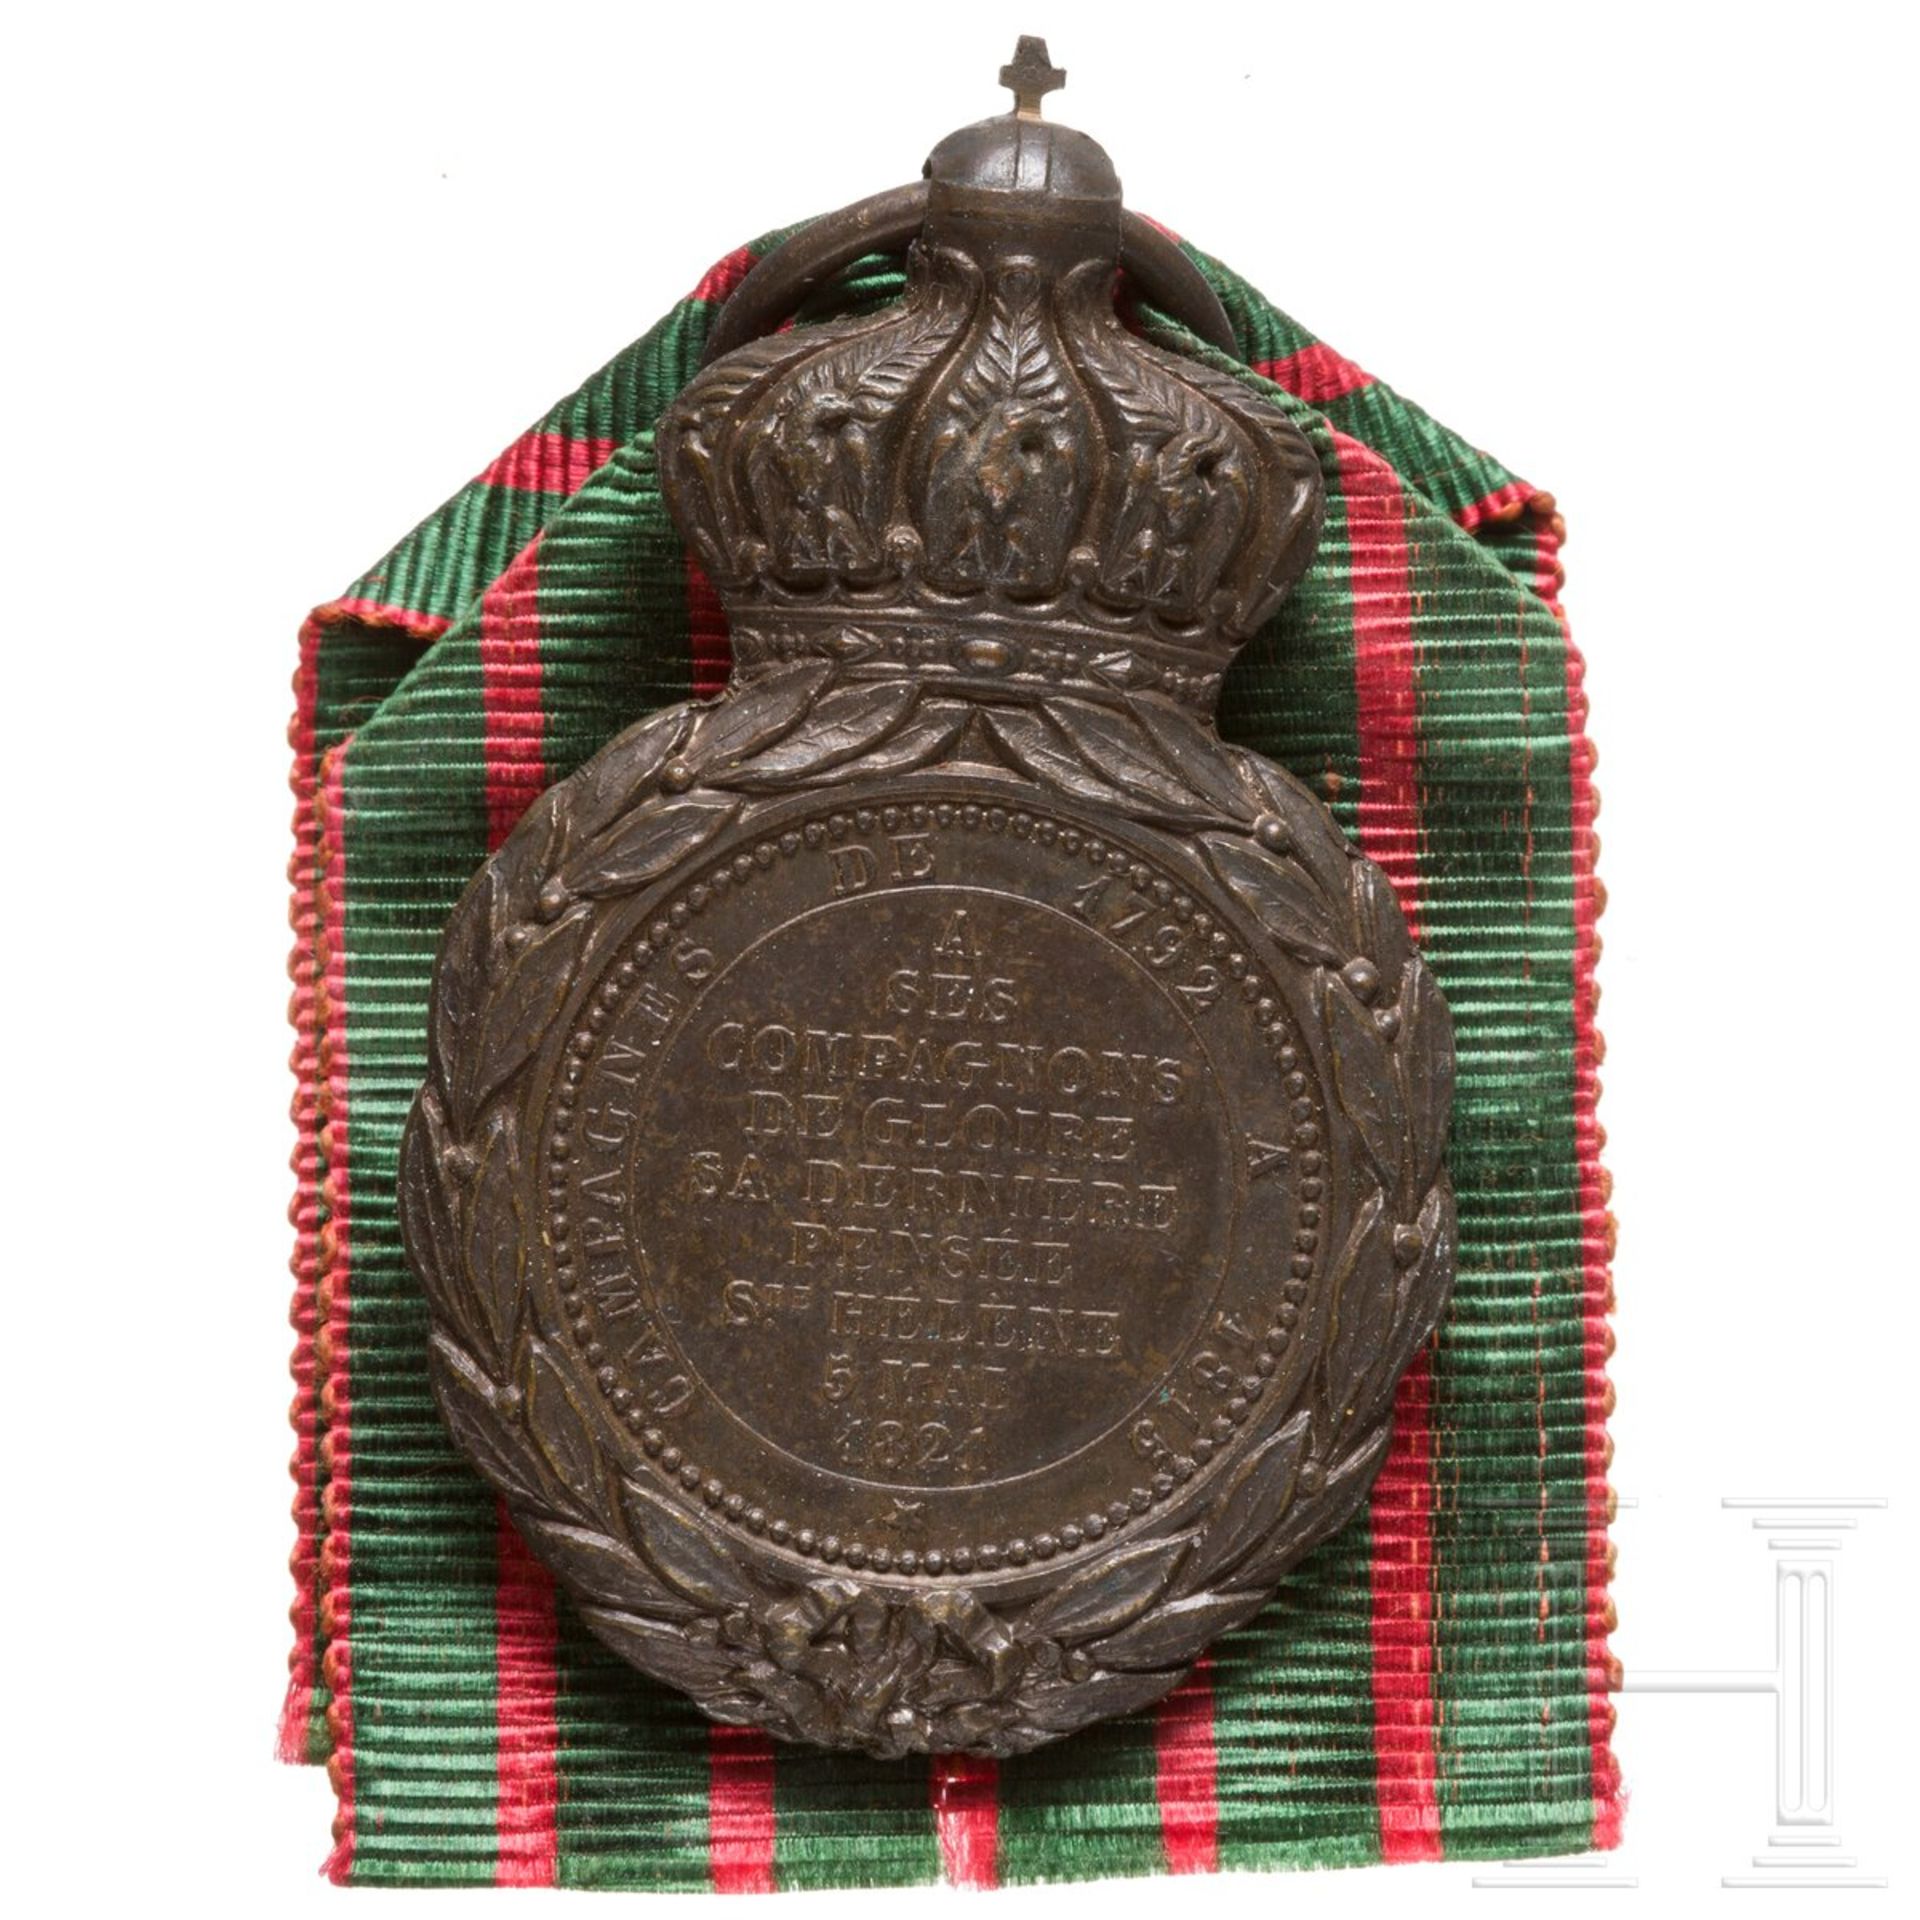 St.-Helena-Medaille in Originalschachtel, datiert 1857 - Bild 2 aus 2